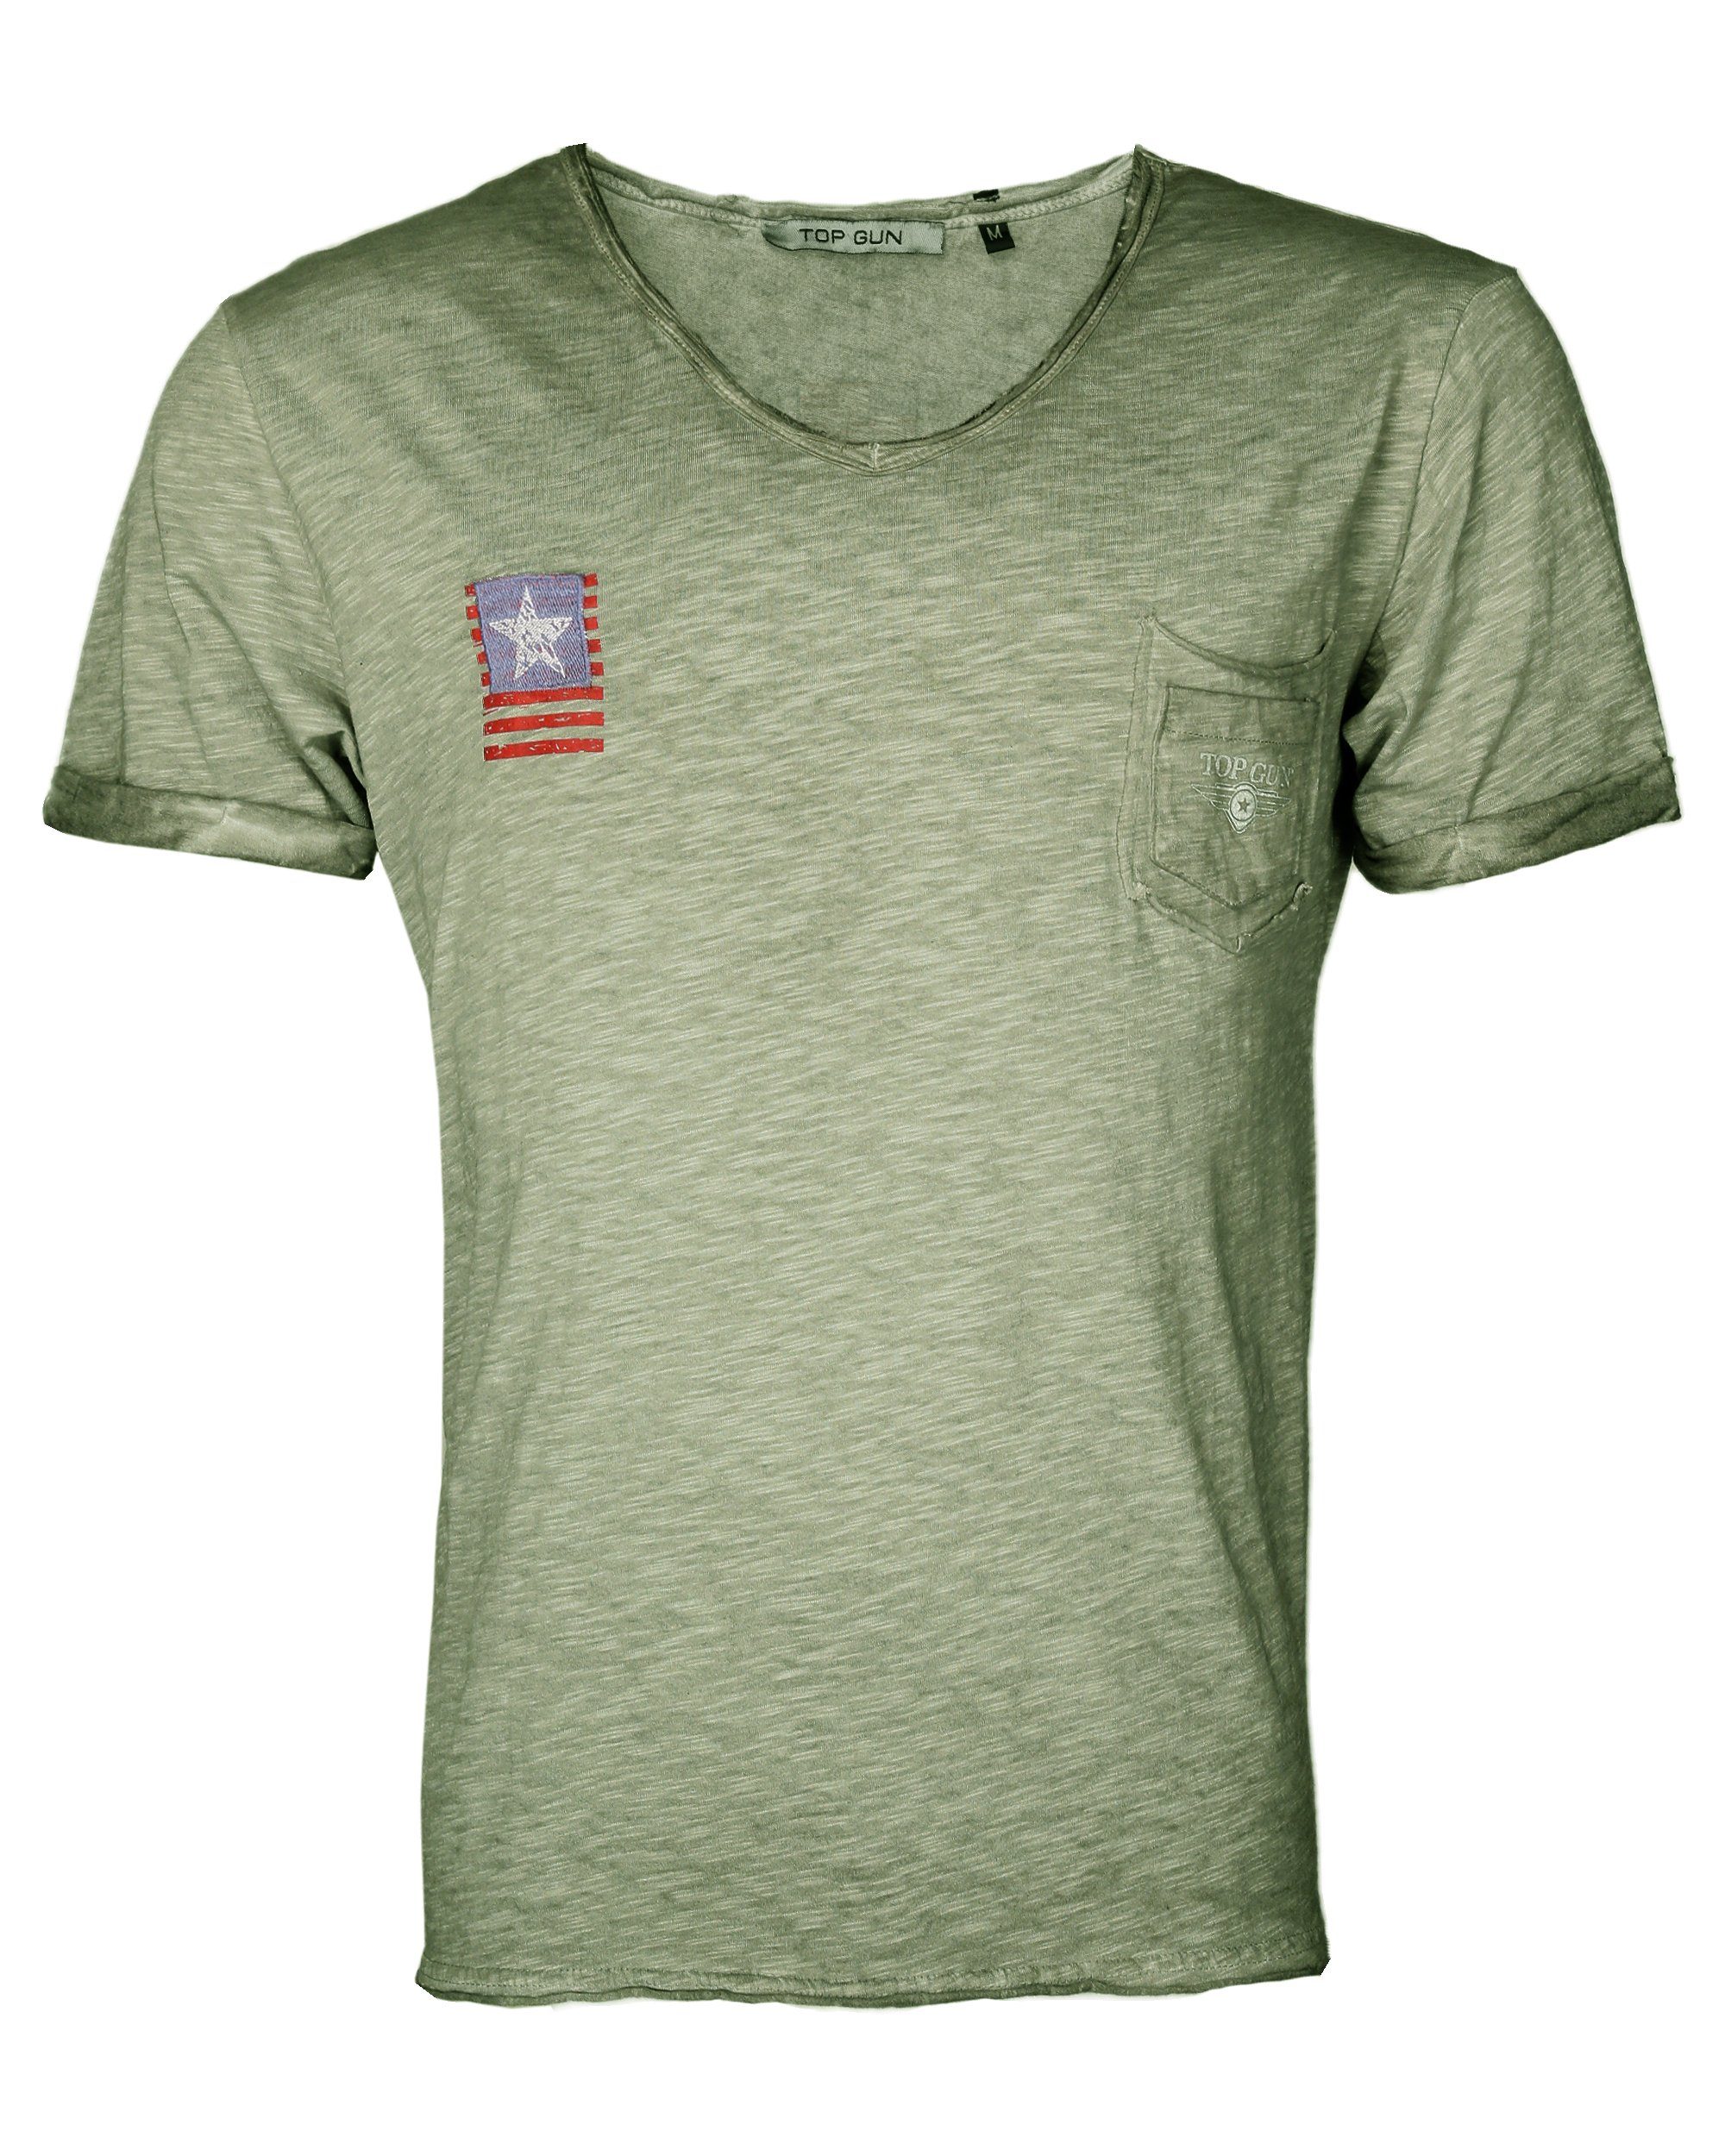 TOP GUN T-Shirt TG20193157 green | T-Shirts